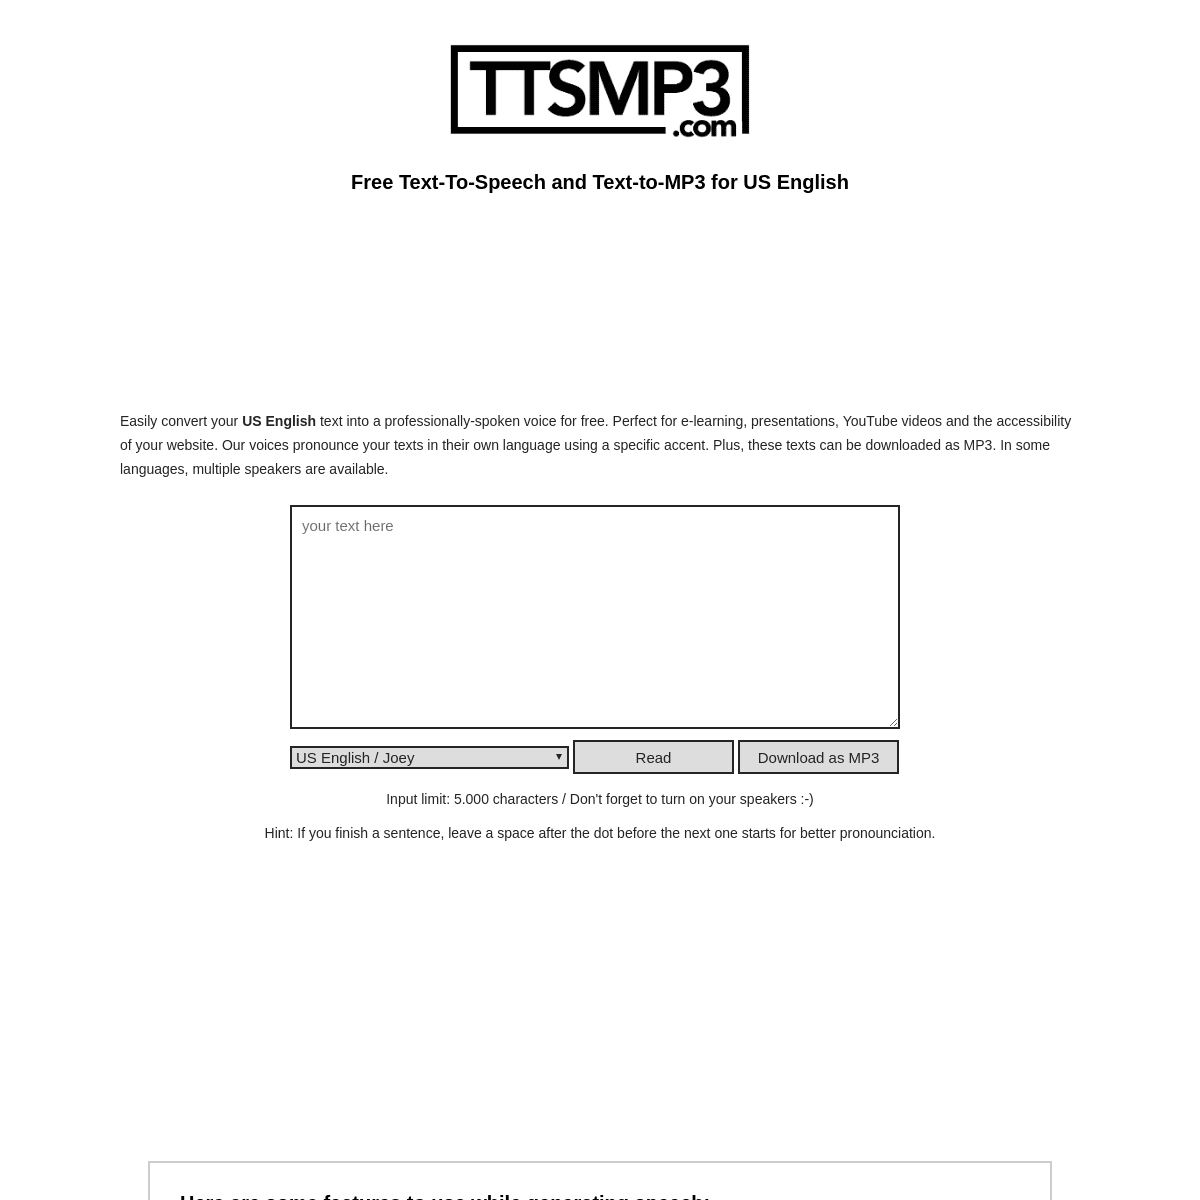 A complete backup of ttsmp3.com